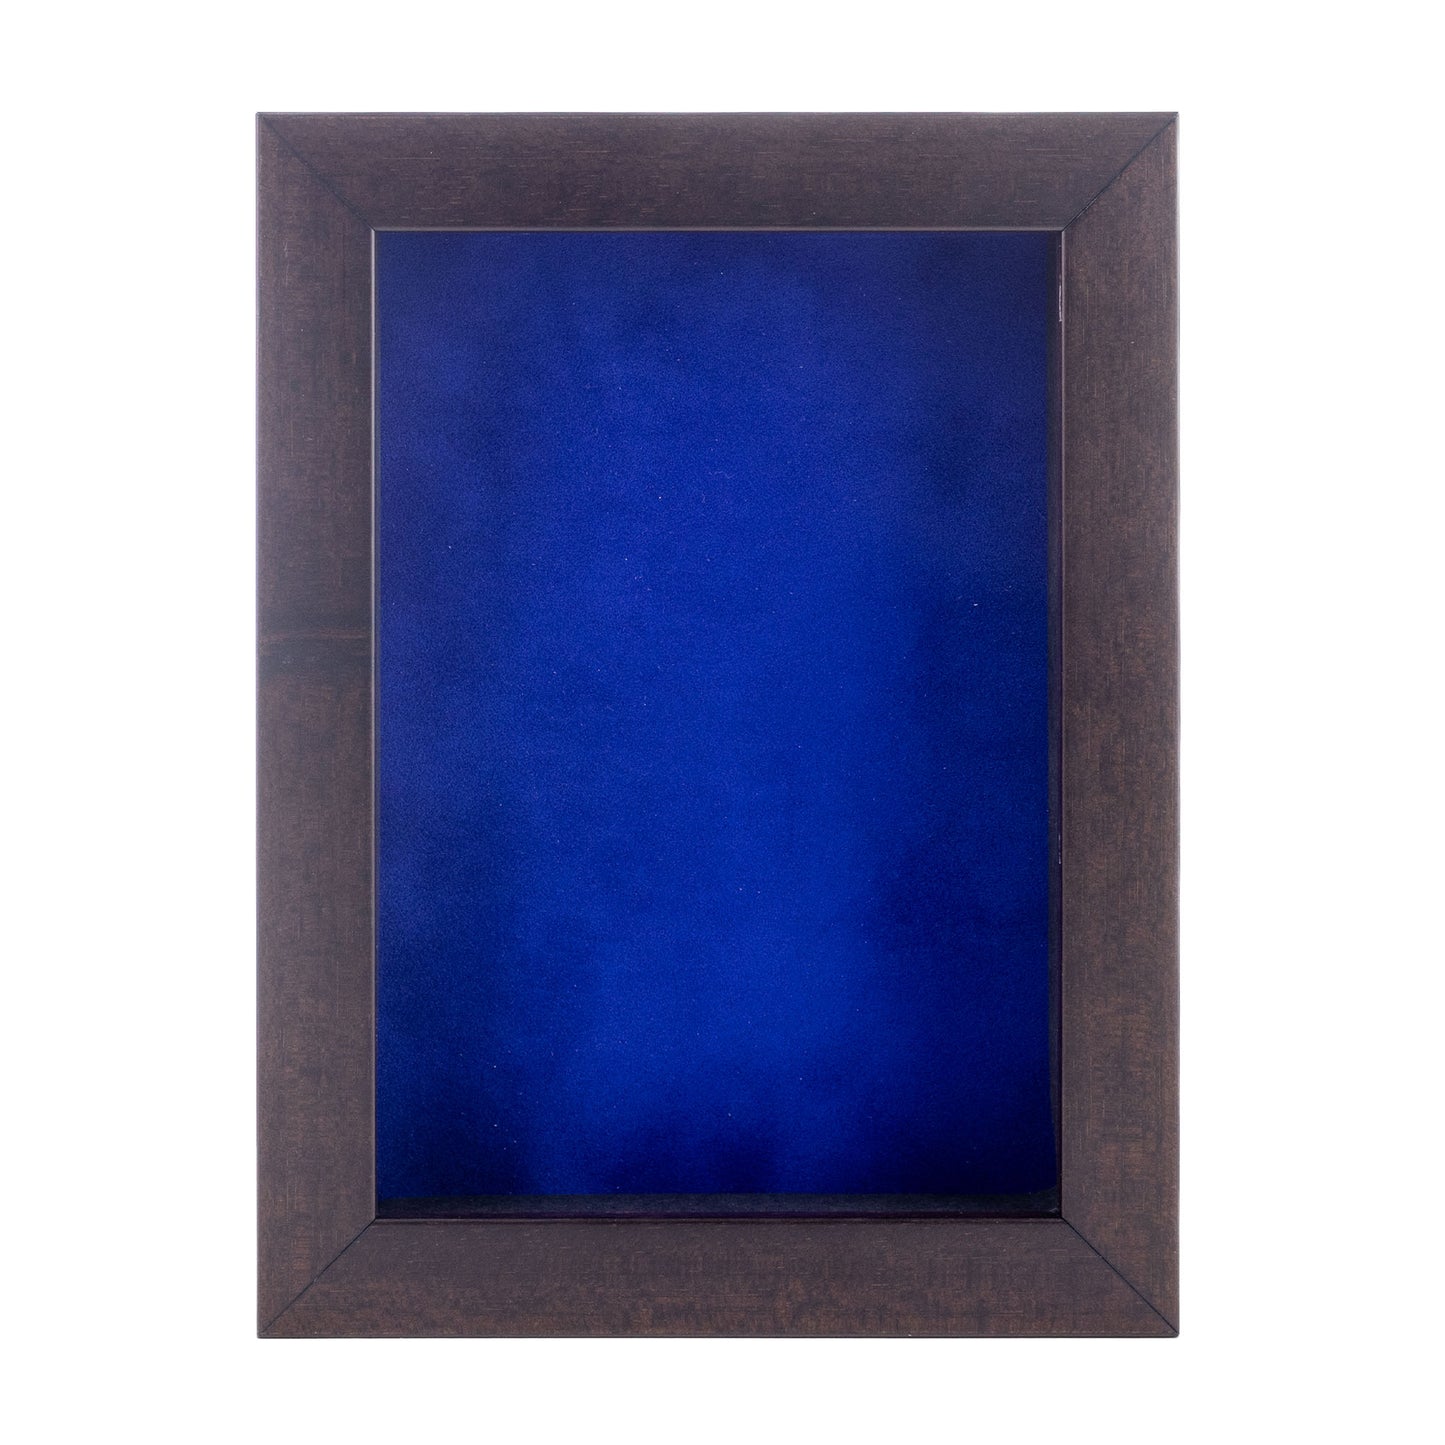 Walnut Shadow Box Frame With Royal Blue Acid-Free Suede Backing